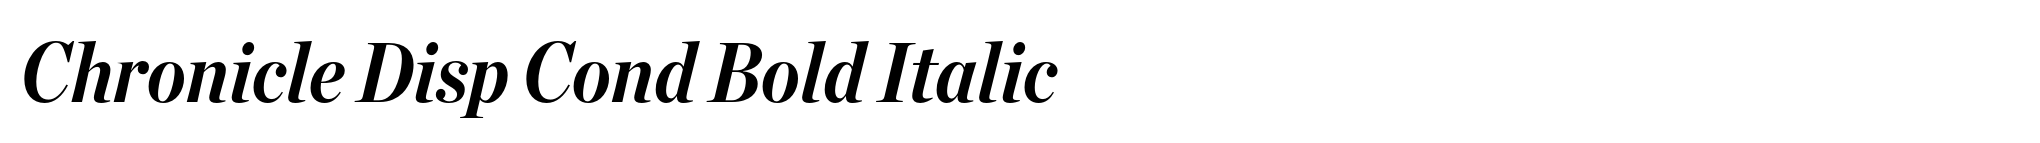 Chronicle Disp Cond Bold Italic image